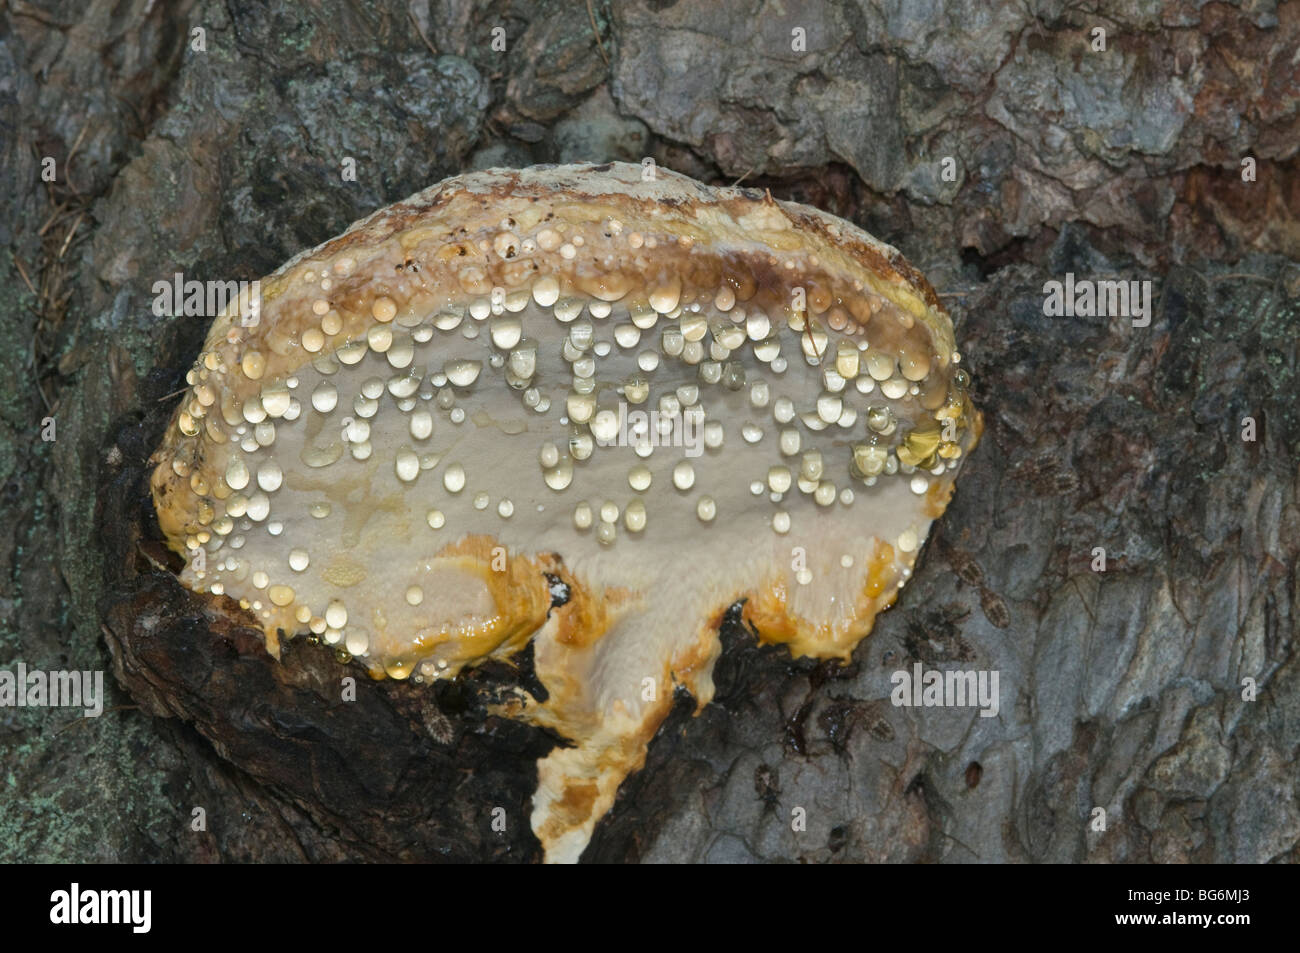 Italy, Piedmont, Oulx (To), a poisonous fungus on the pine bark, Fomitopsis pinicola Stock Photo